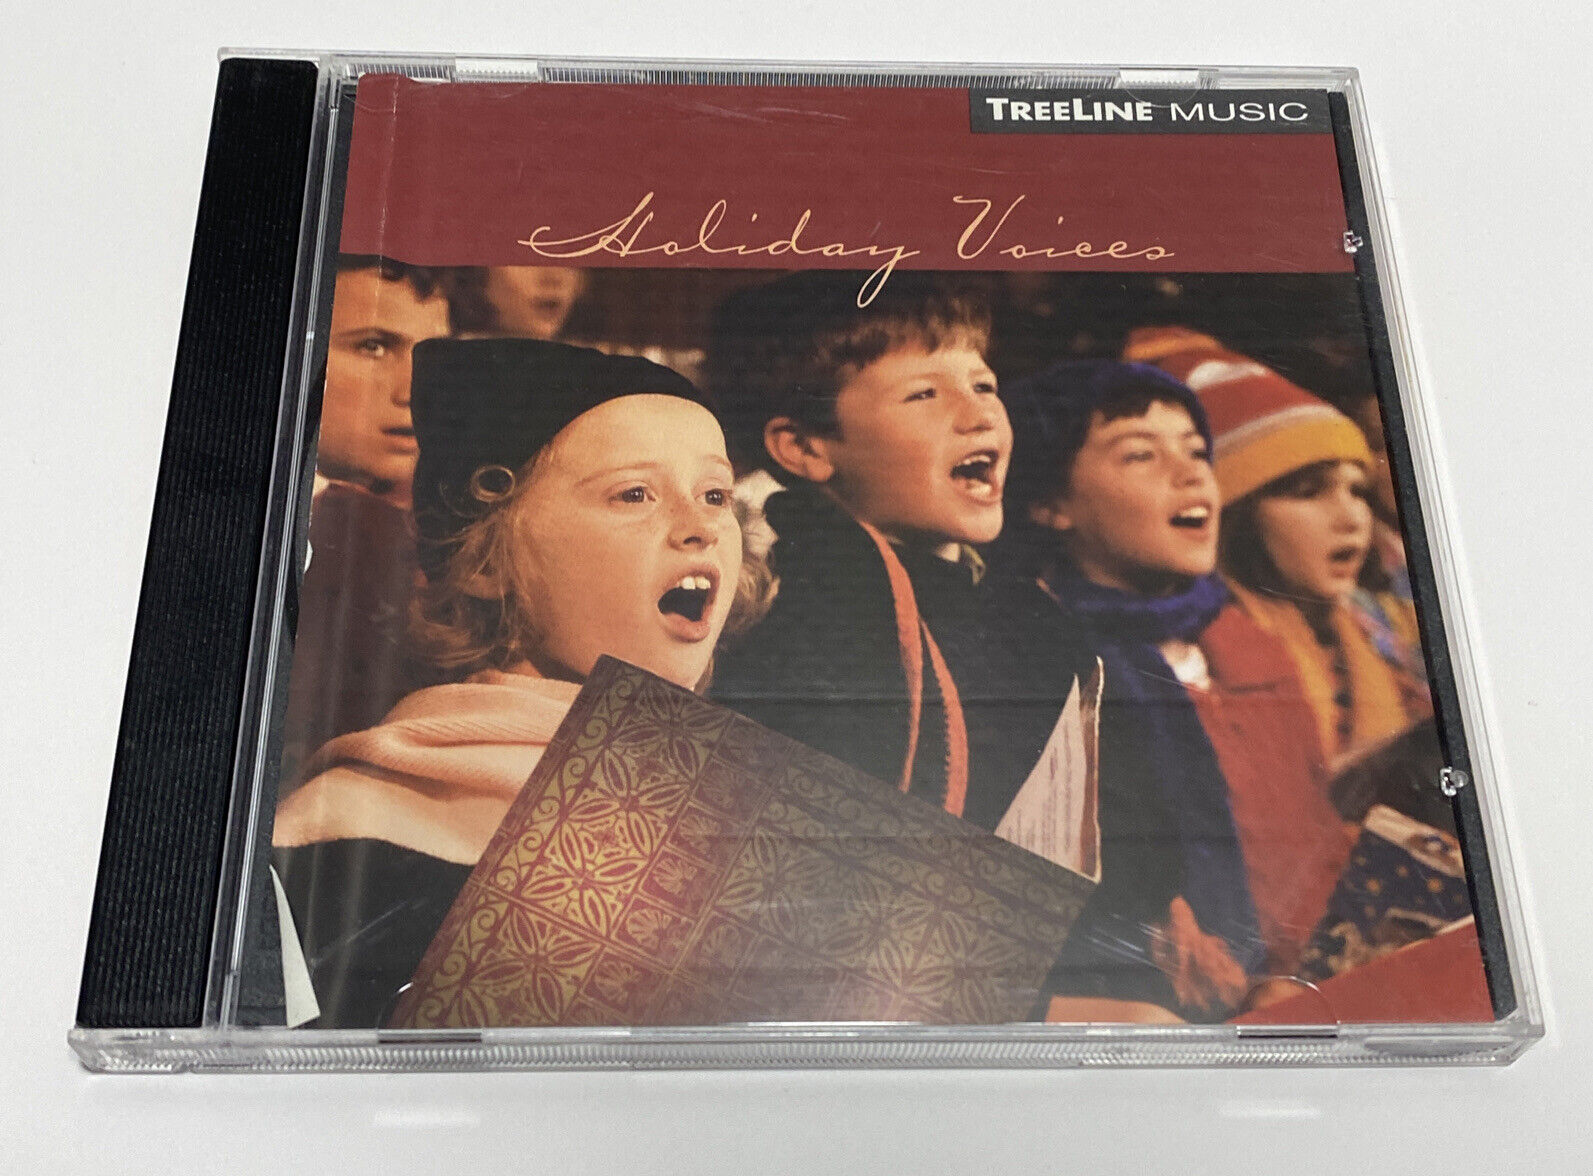 Holiday Voices CD 2003 Treeline Music Mogul Music Christmas Music